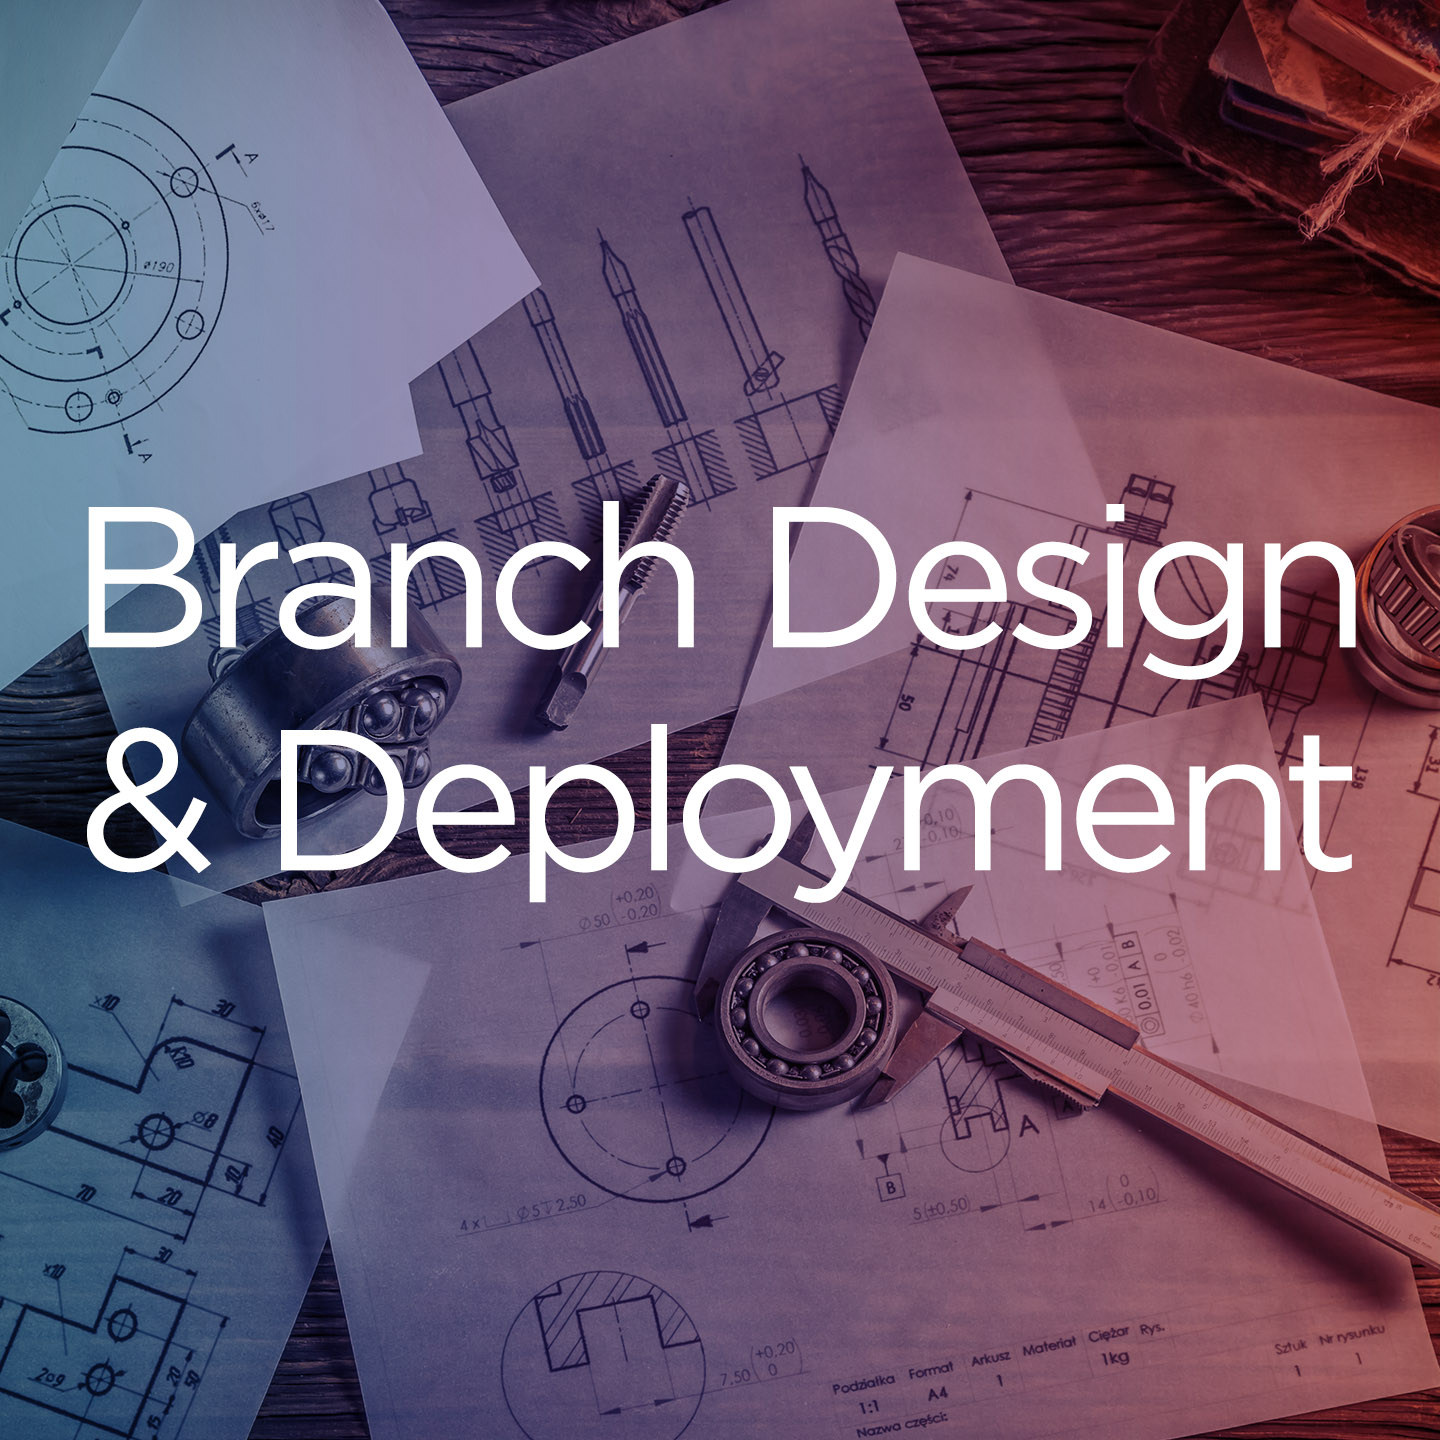 Branch Design and Deployment